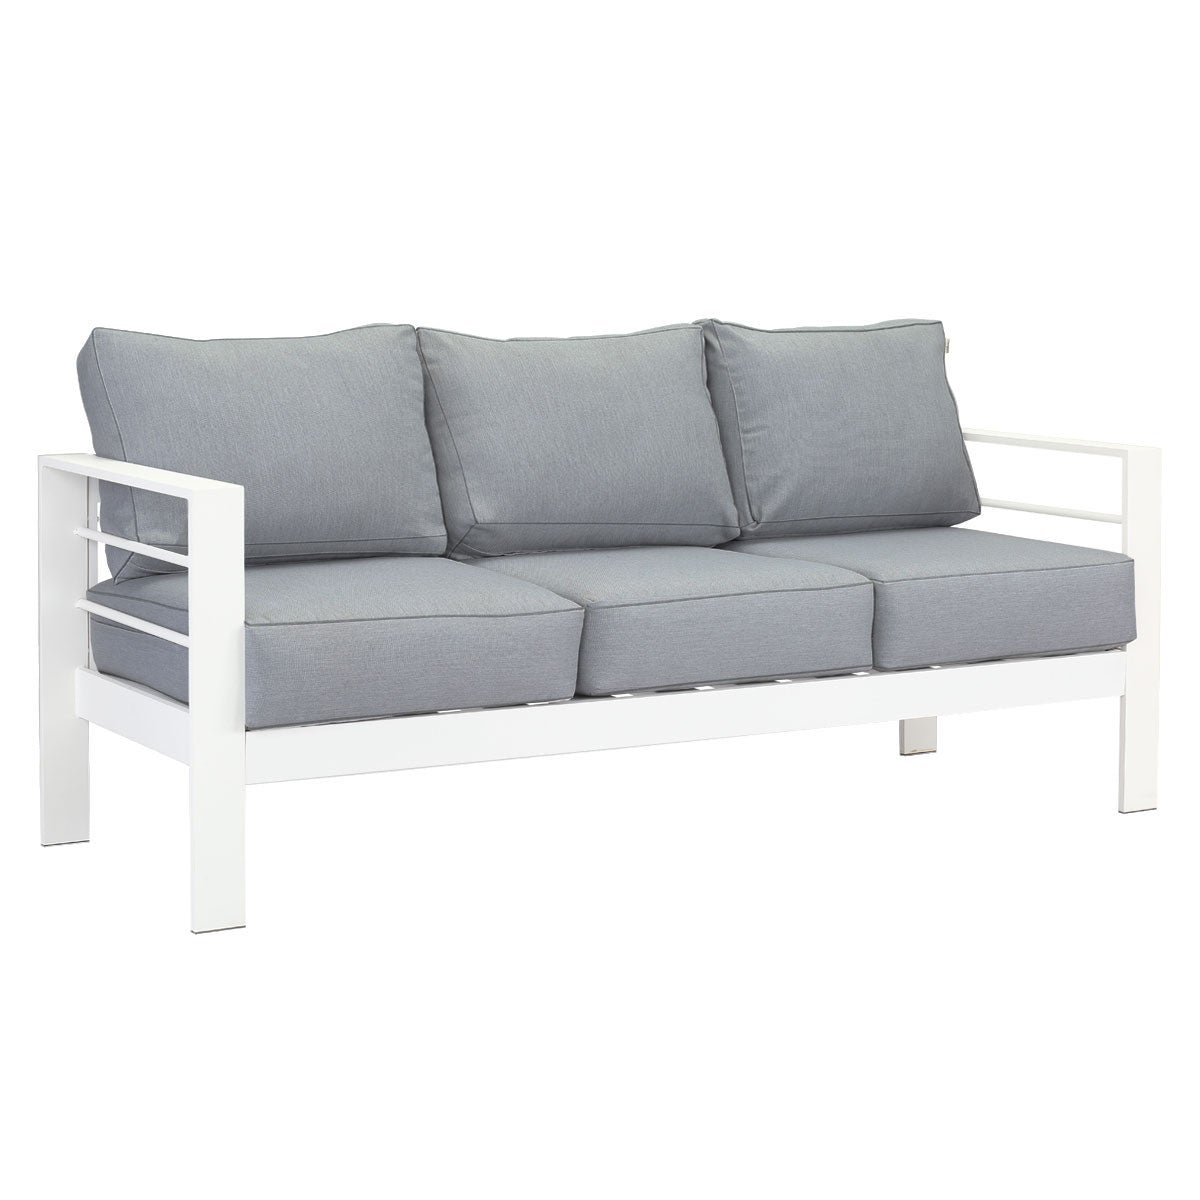 Paris 3 Seater White Aluminium Outdoor Sofa Lounge with Arms - Grey Cushion